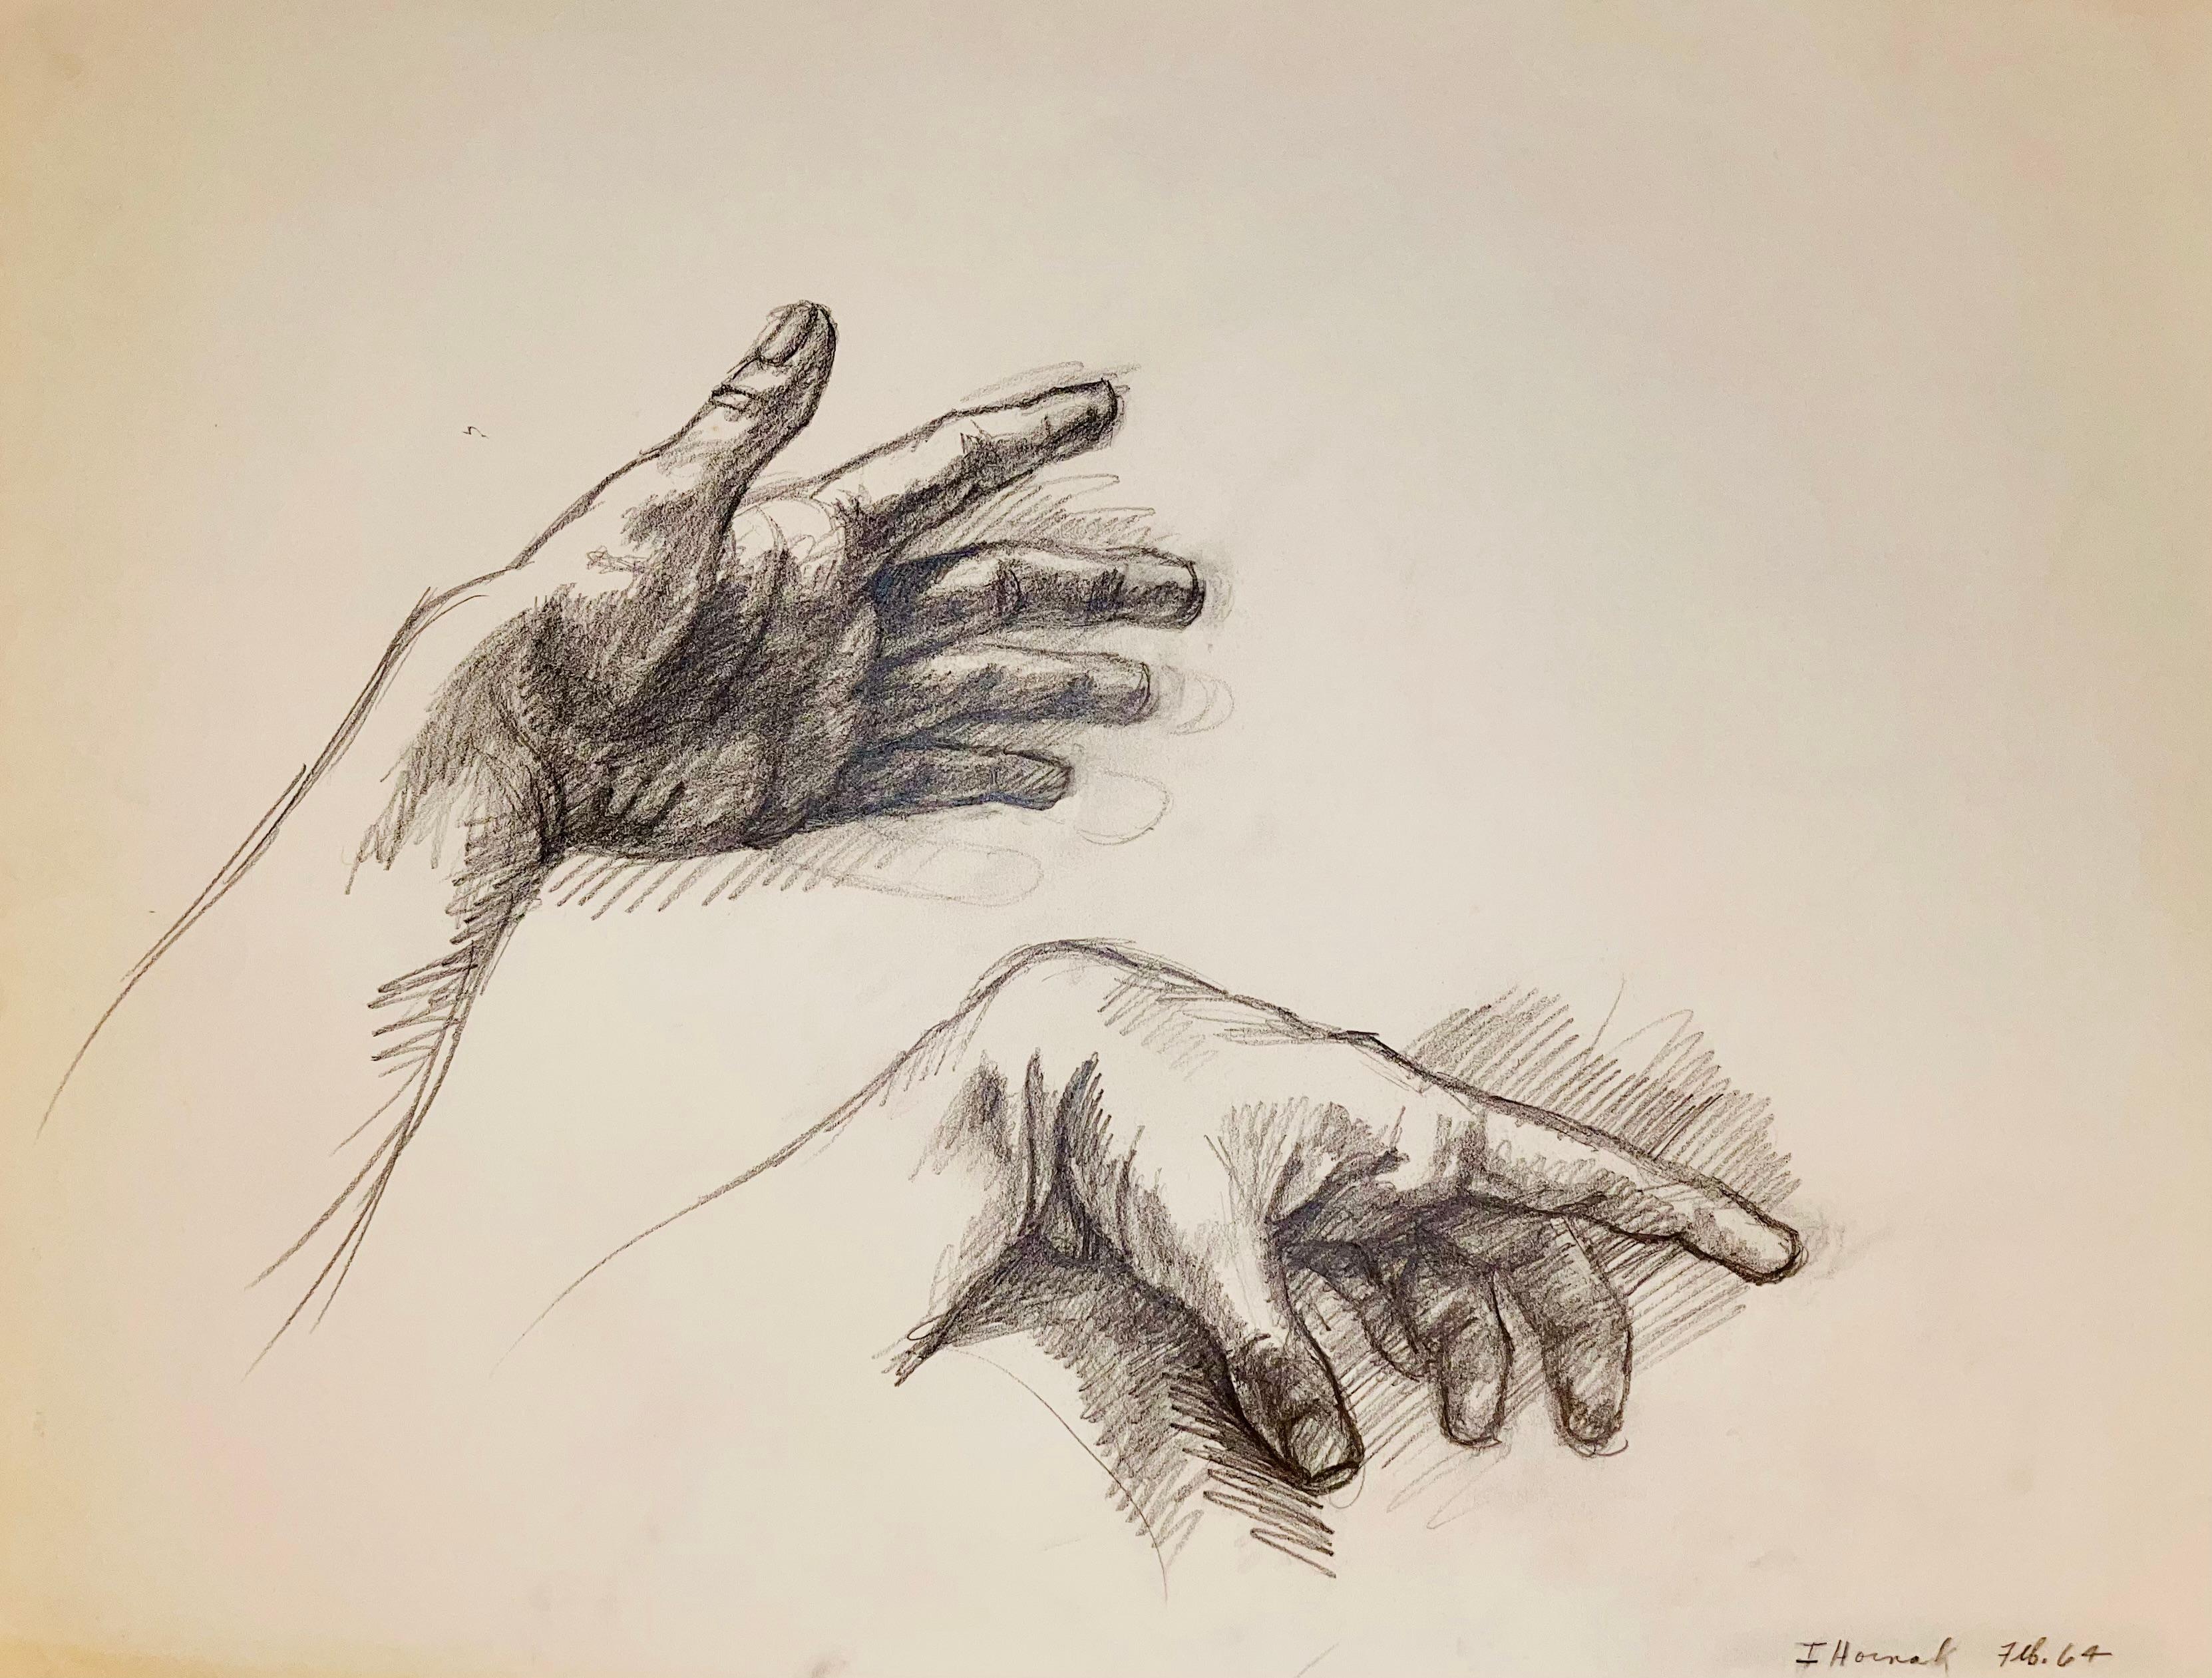 Untitled (Renaissance Male Hand Figure Study), 1964, Ian Hornak — Drawing